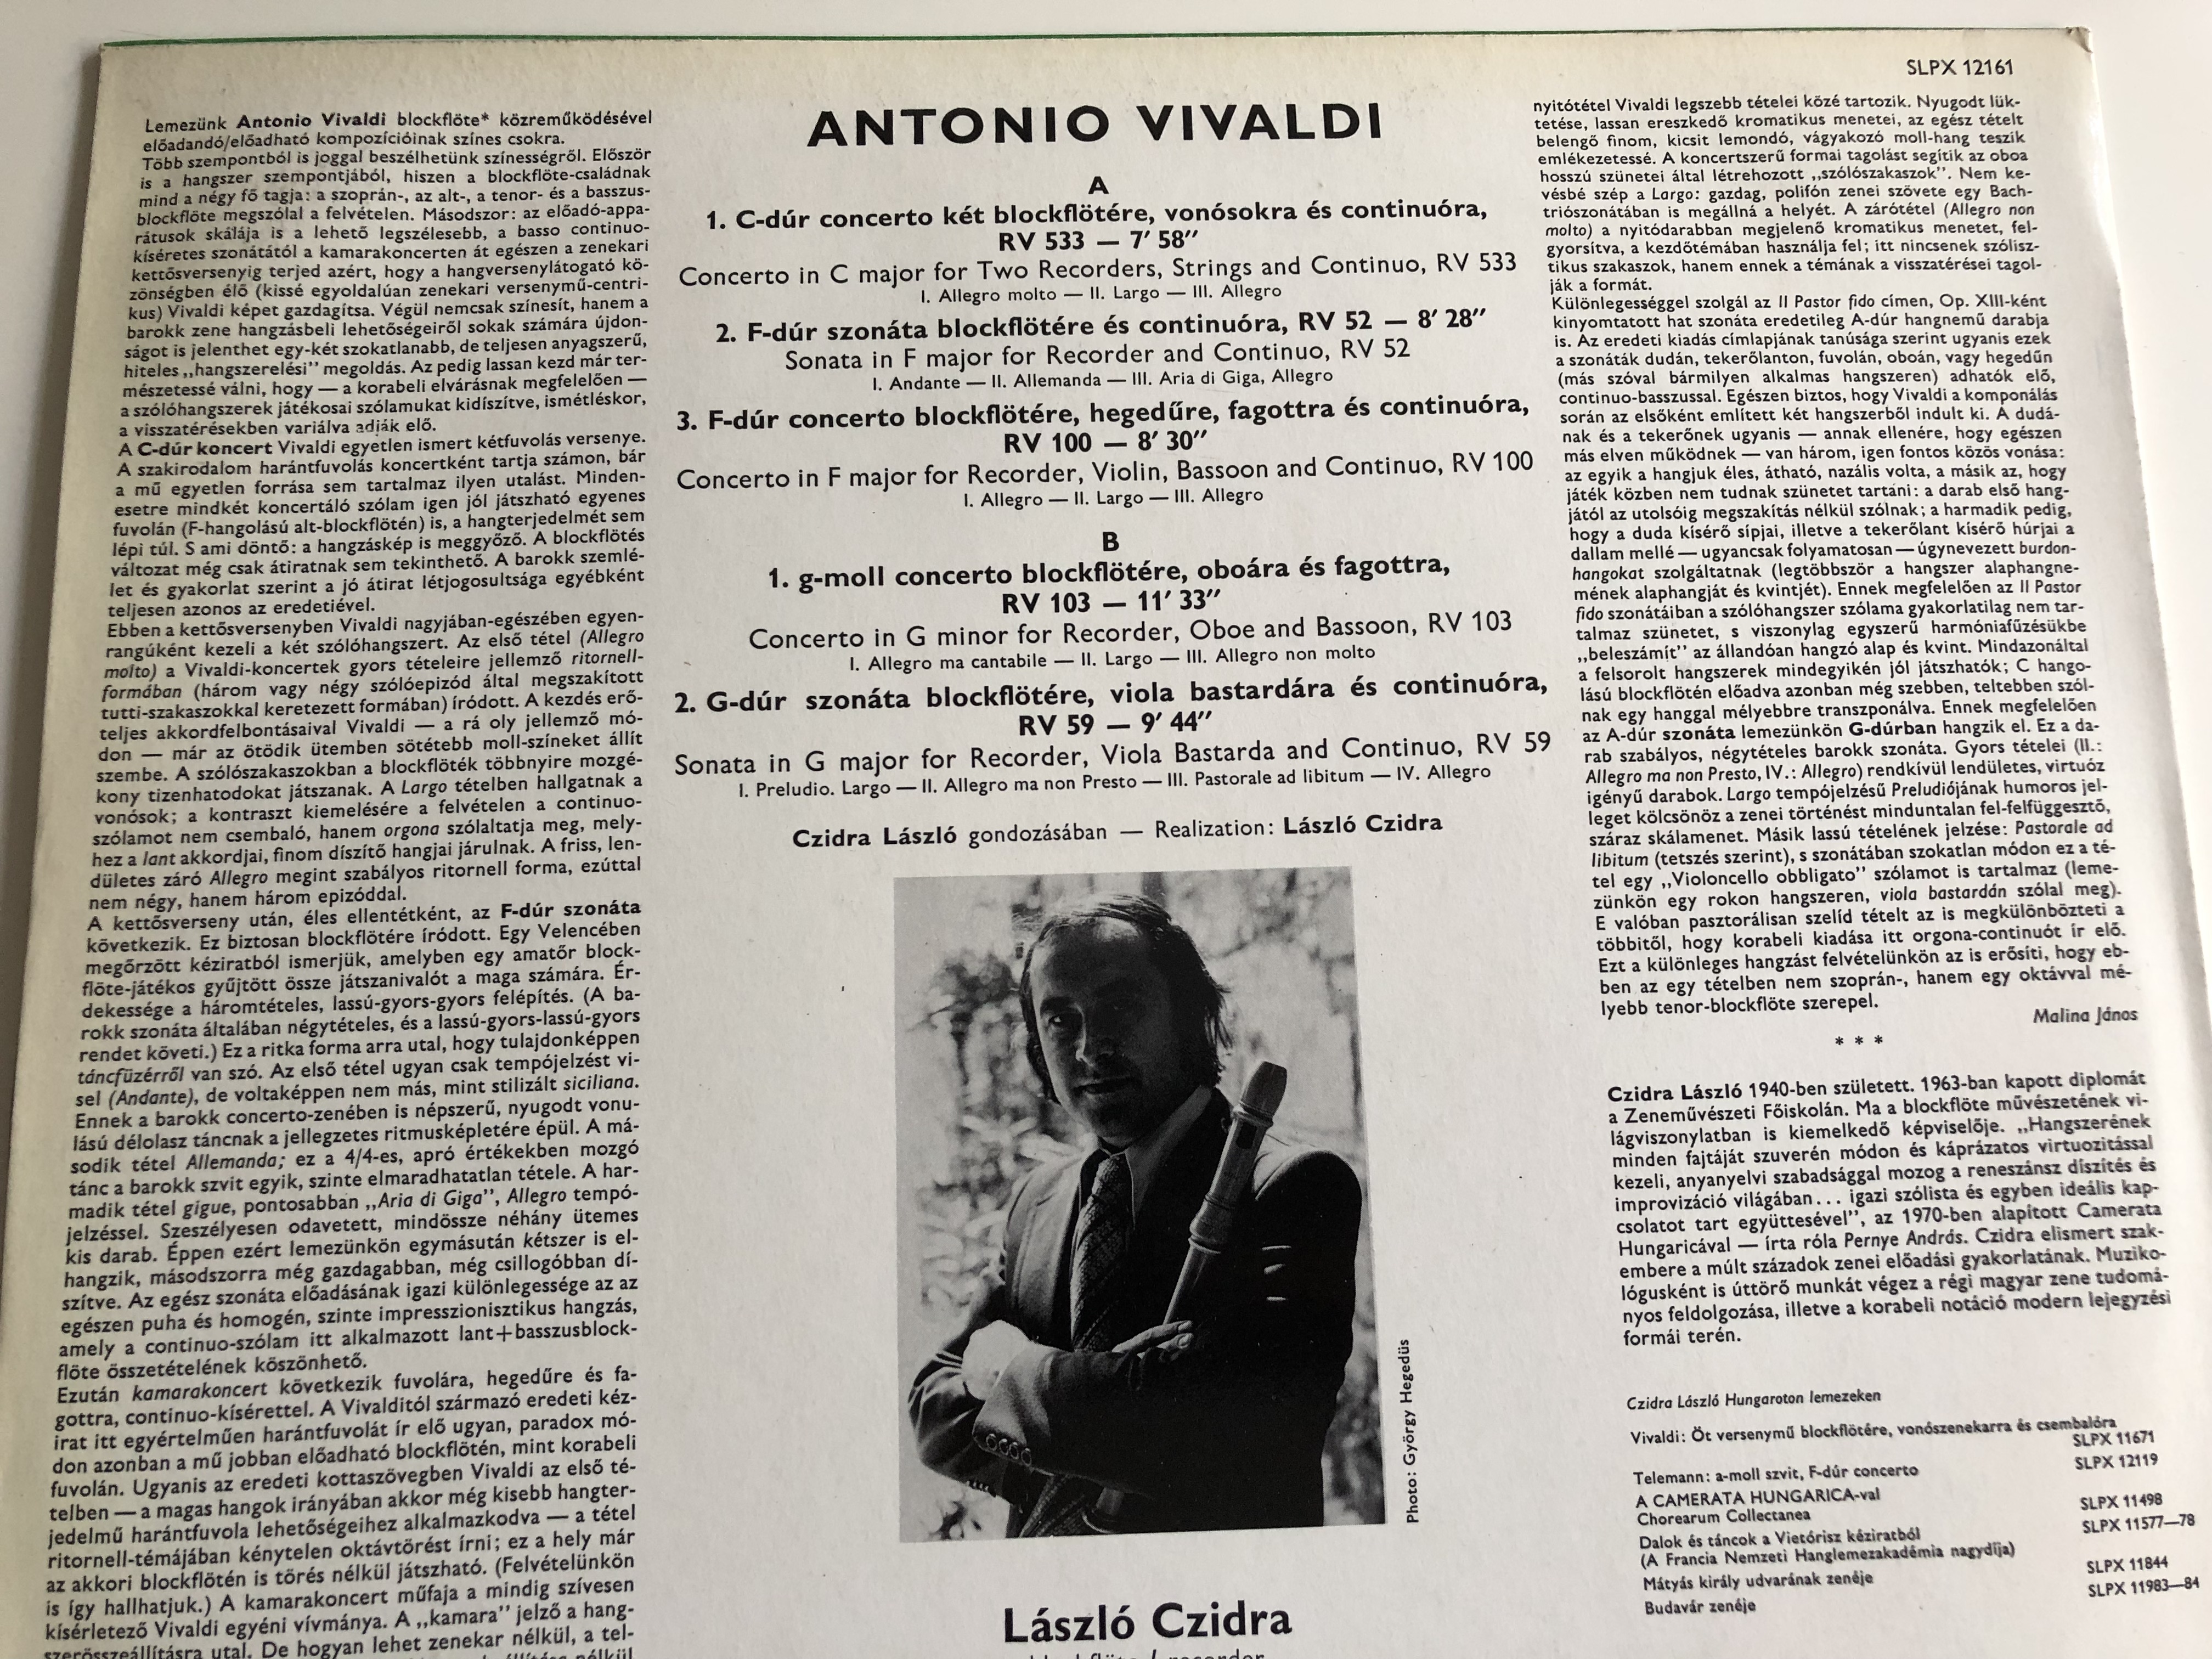 Antonio Vivaldi - Three Concerti Two Sonatas / László Czidra / Liszt Ferenc  Chamber Orchestra Budapest / János Rolla / HUNGAROTON LP STEREO / SLPX  12161 - bibleinmylanguage